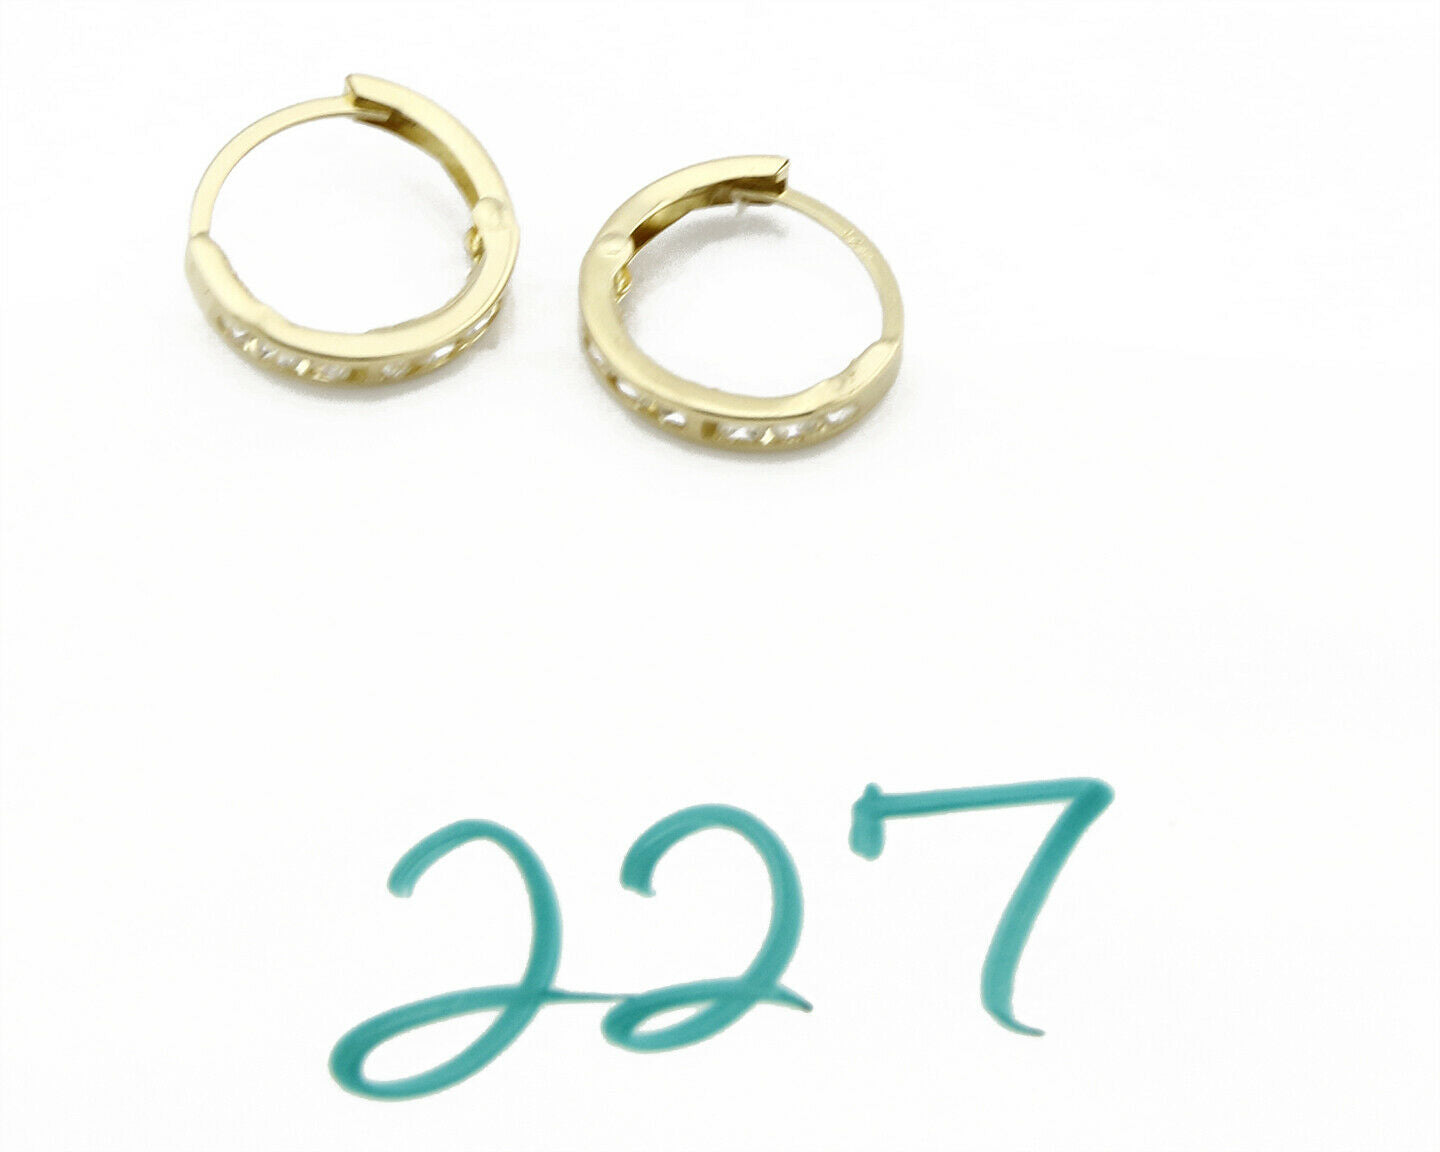 14k Solid Yellow Gold Huggie Earrings 3mm x 16mm Hoop Earrings With CZ